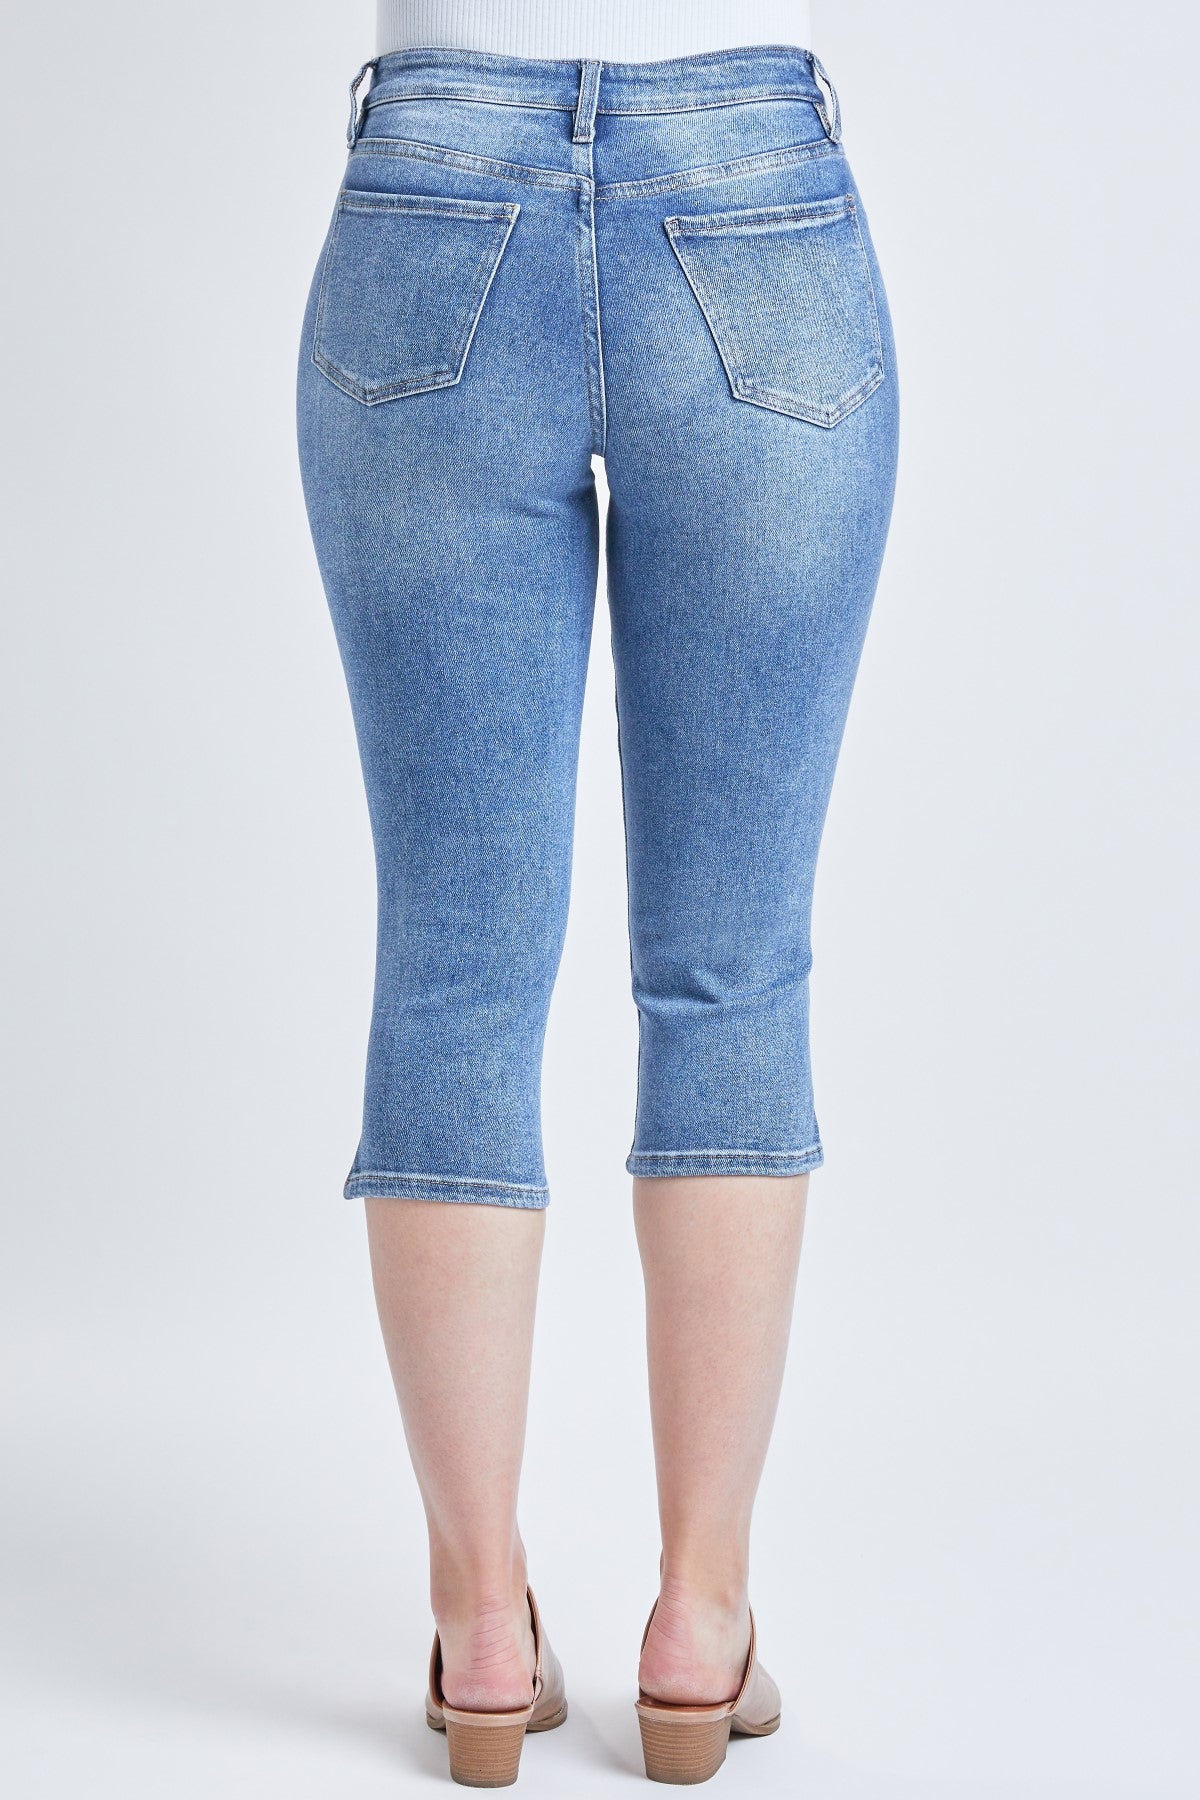 Missy Vintage Exposed Button Capri Jeans With Side Slit Hem, Pack Of 12